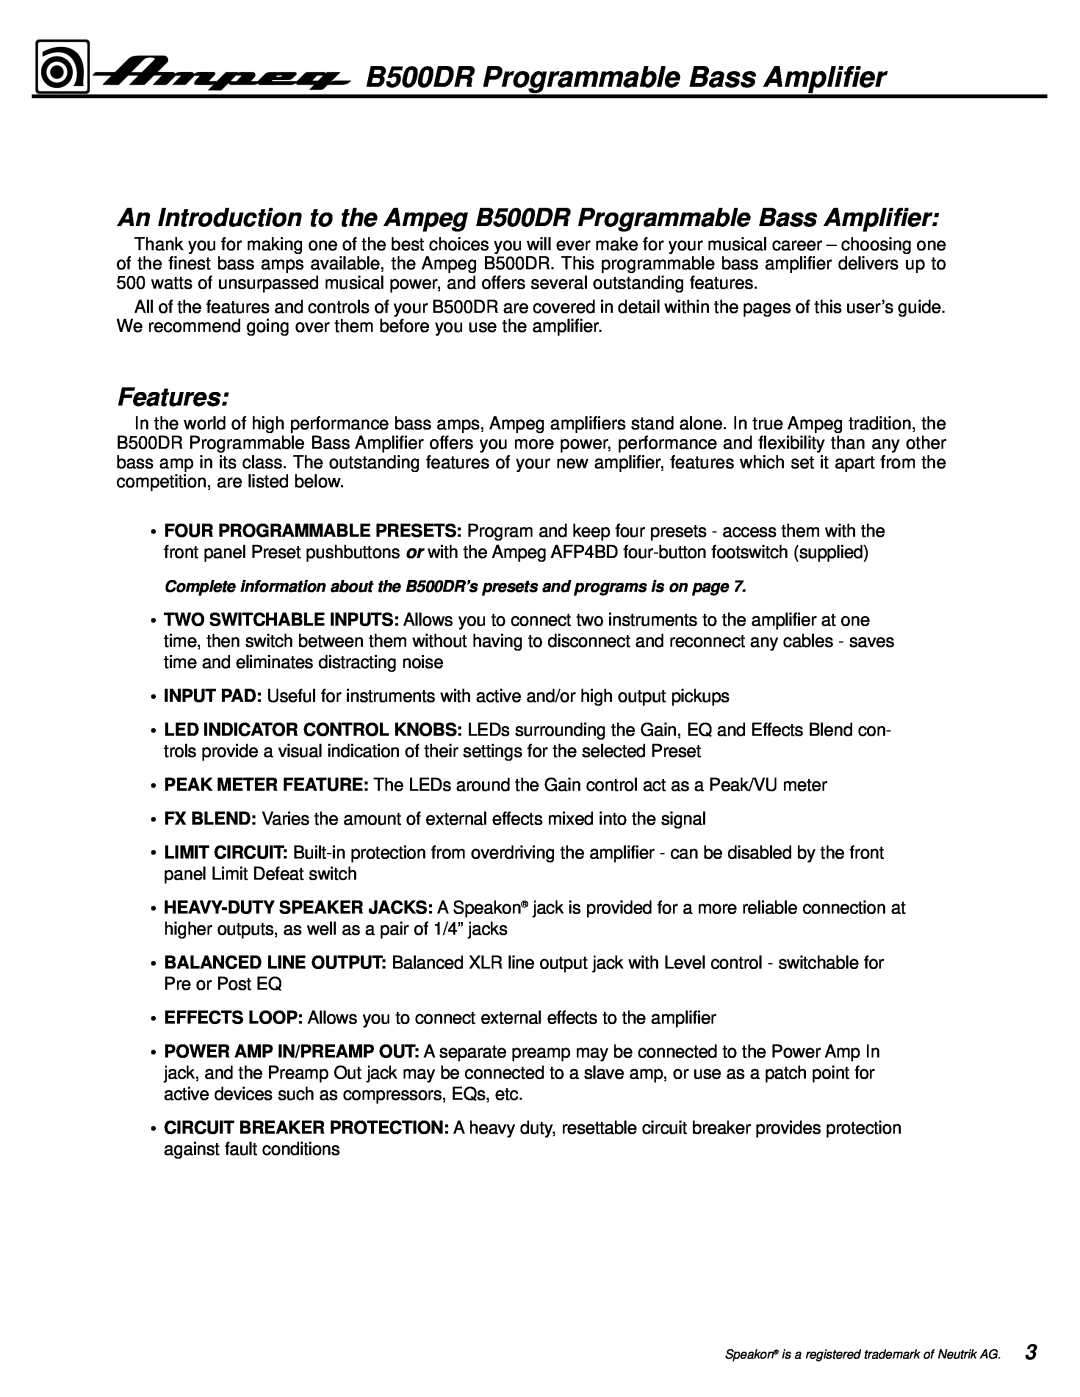 Ampeg manual Features, B500DR Programmable Bass Amplifier, Speakon is a registered trademark of Neutrik AG 